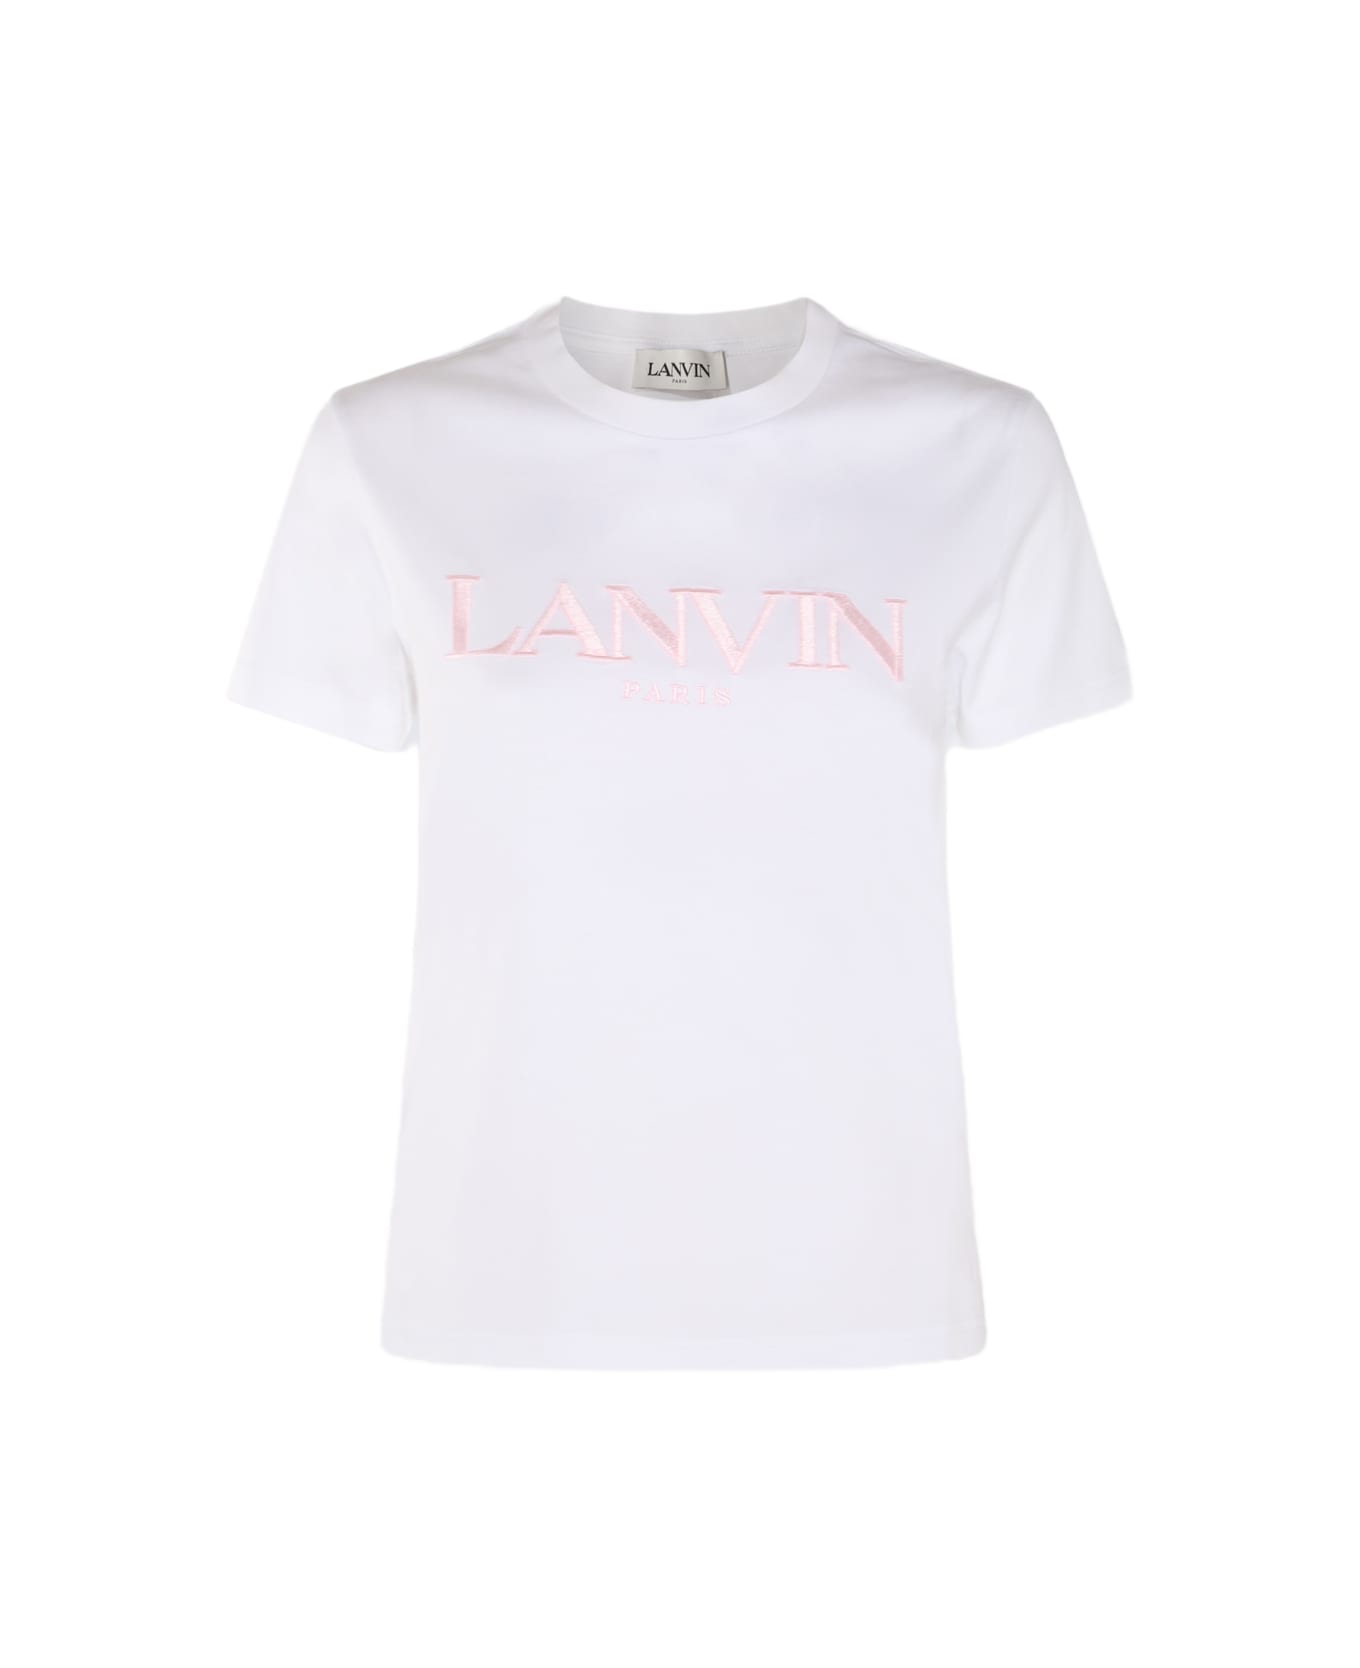 Lanvin White Cotton T-shirt - OPTIC WHITE